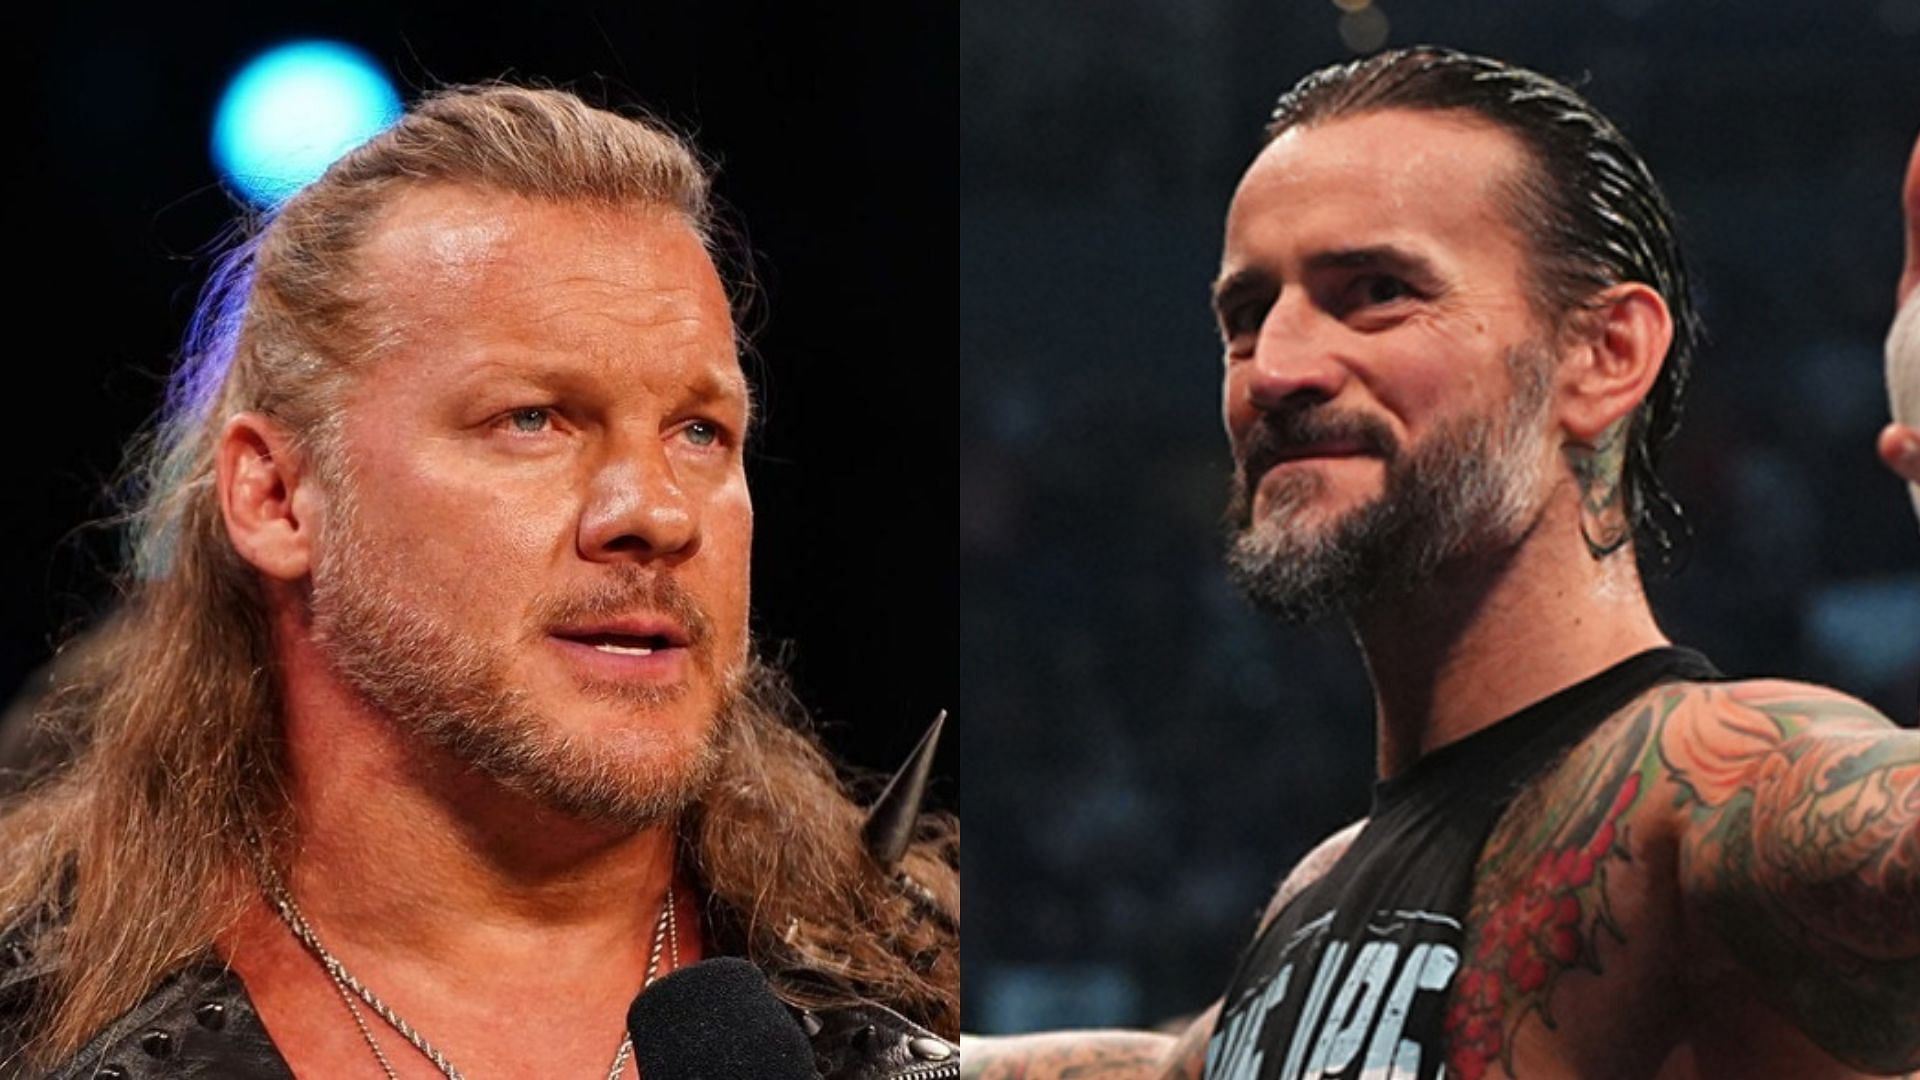 The saga between Chris Jericho and CM Punk continues.